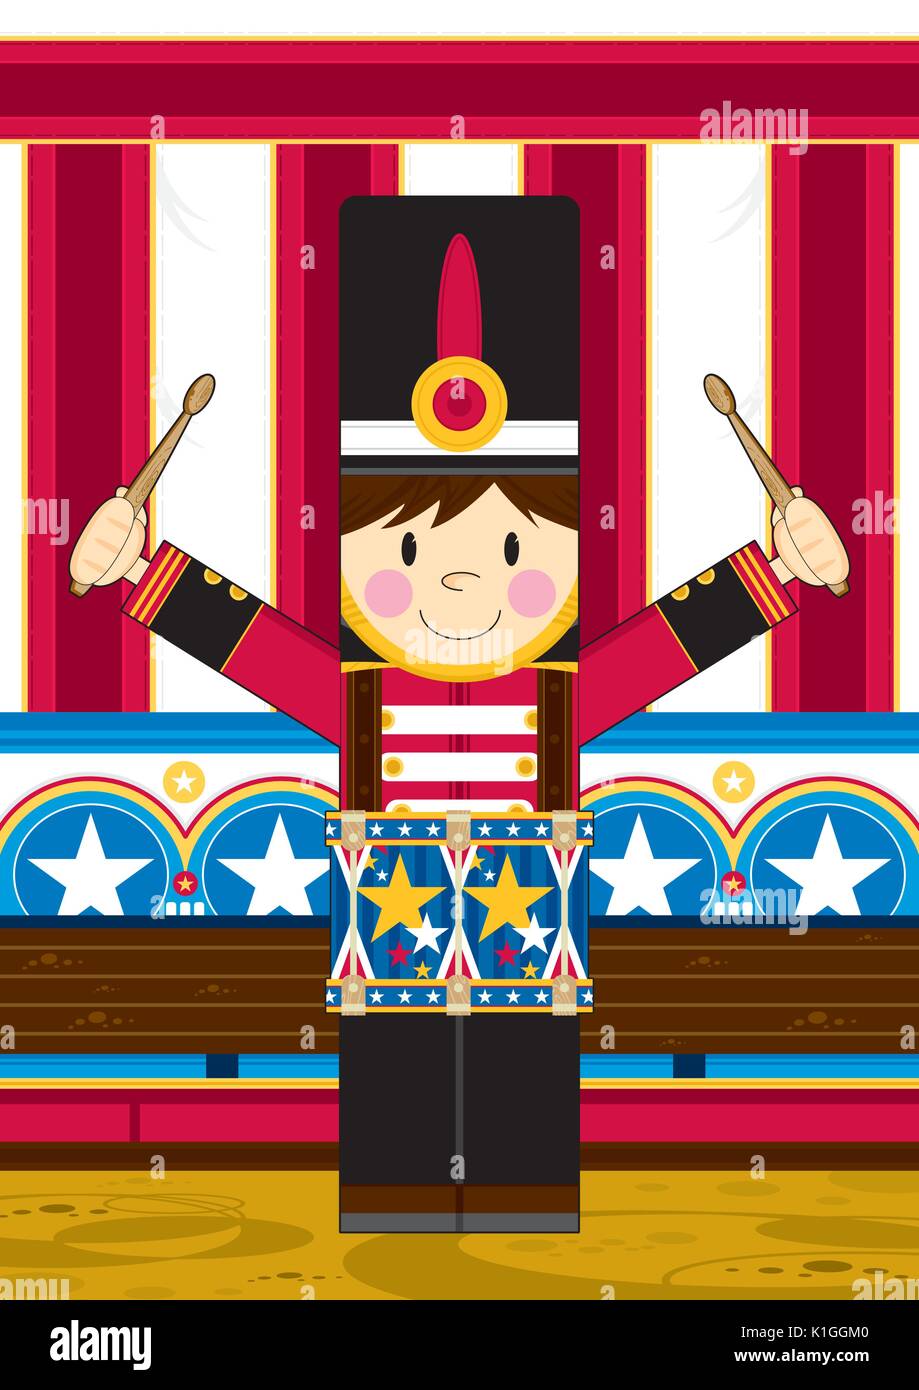 Cute Cartoon Toy Soldier Drummer Boy Vector Illustration Stock Vector Image  & Art - Alamy